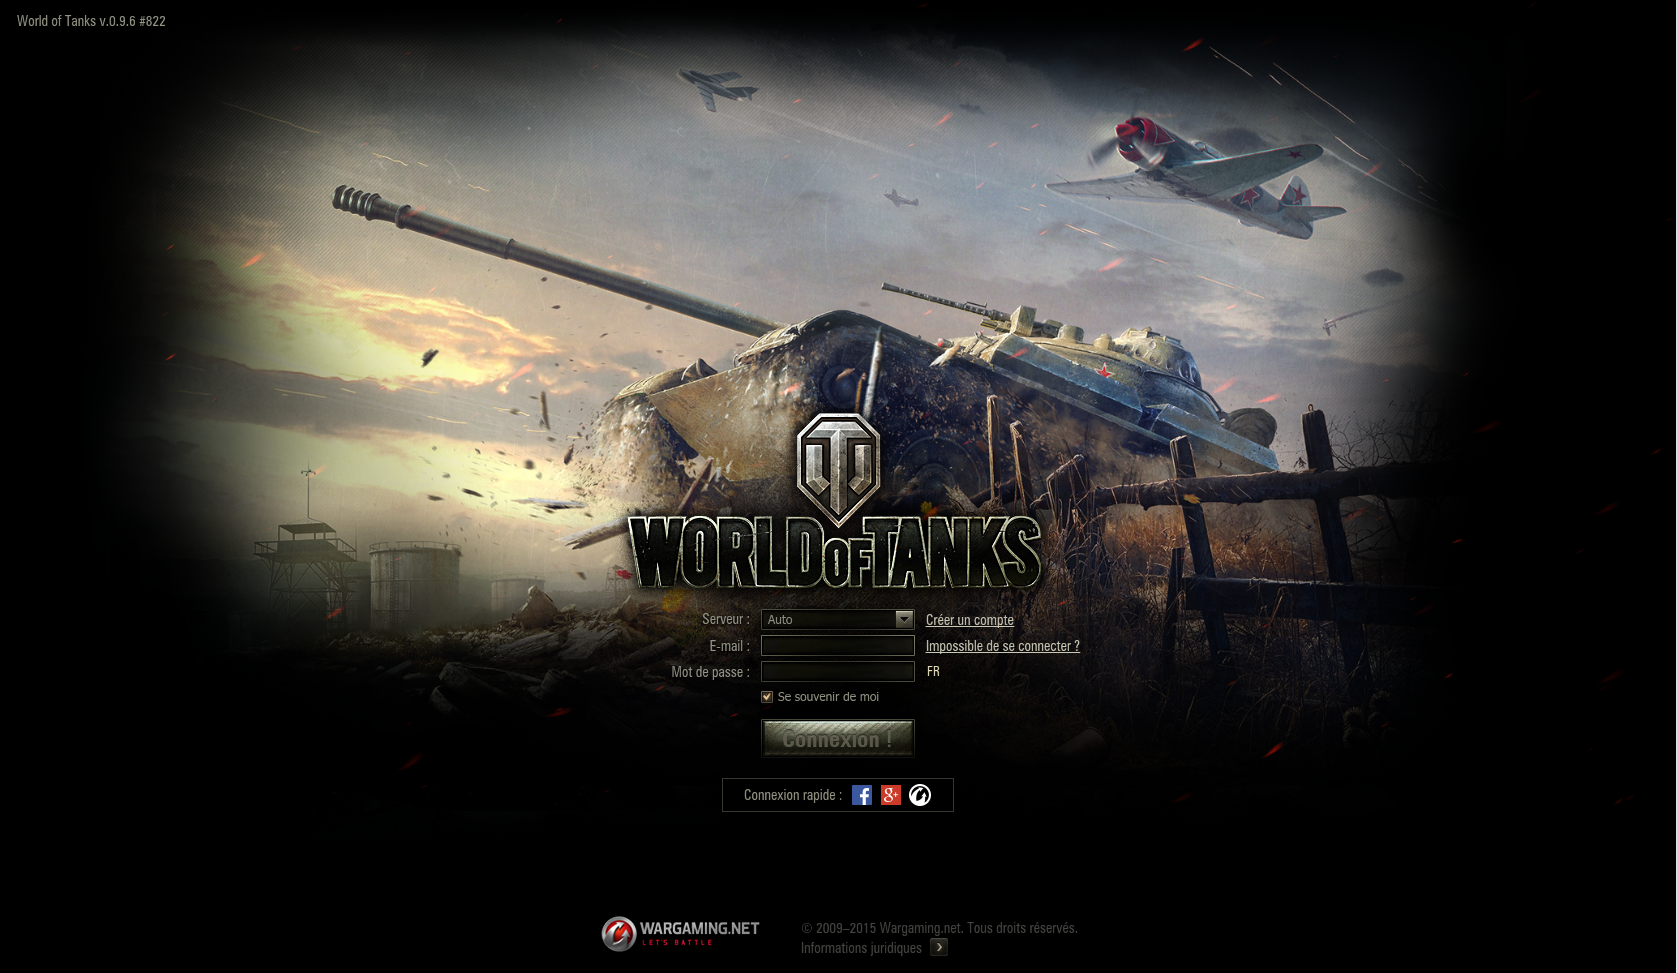 world of tanks login the same as world of warships